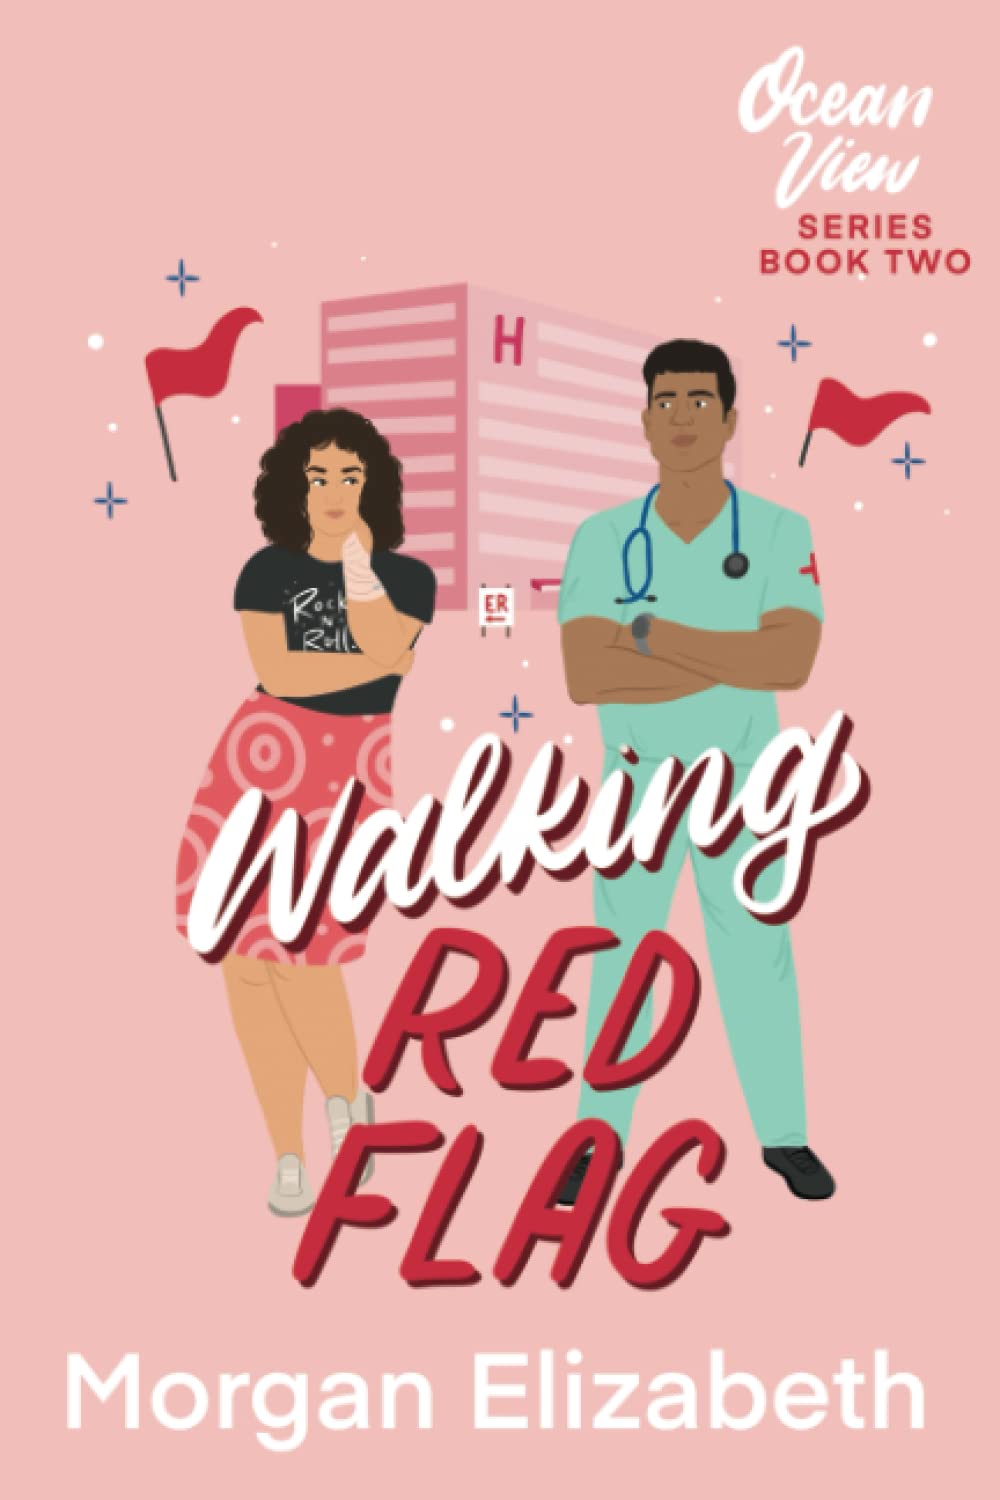 Walking Red Flag (Ocean View #2) PDF Download